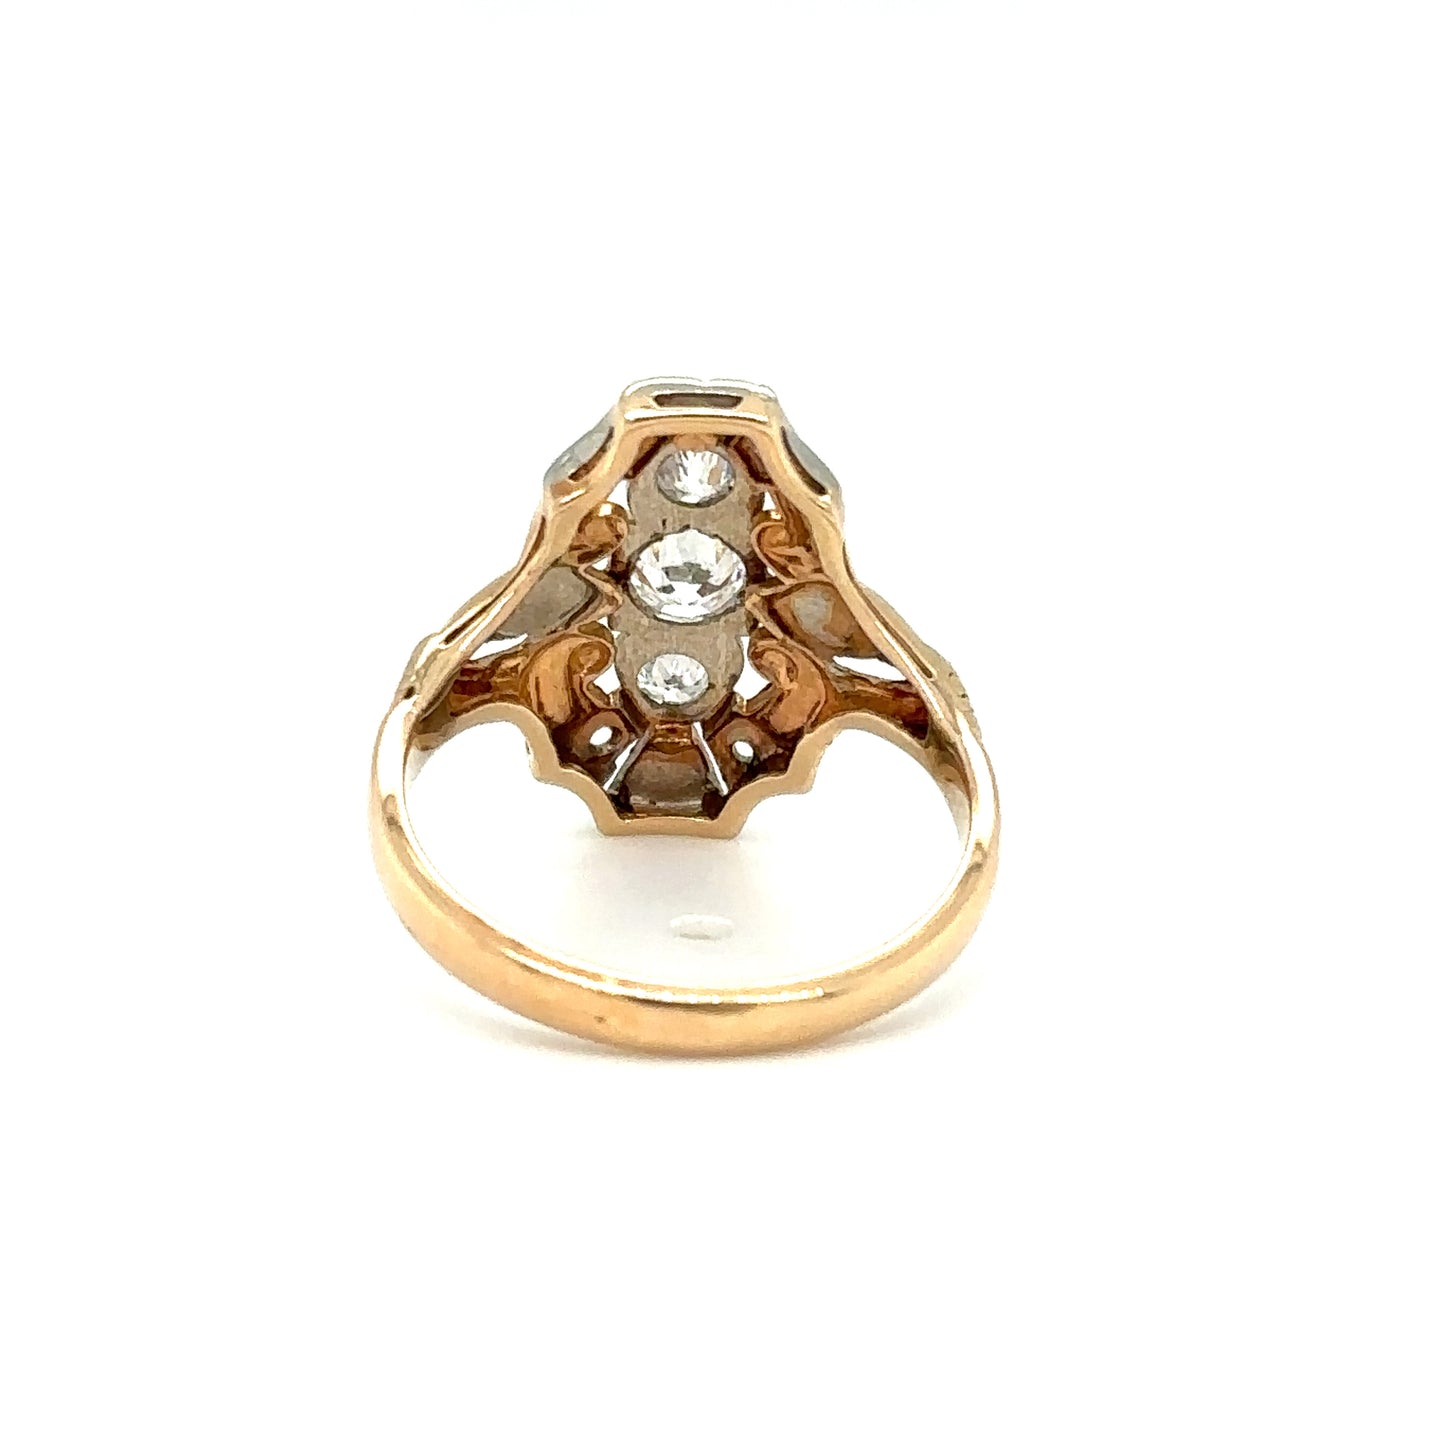 Circa 1920s Art Deco 0.70 CTW Diamond Ring in Two Tone 14K Gold